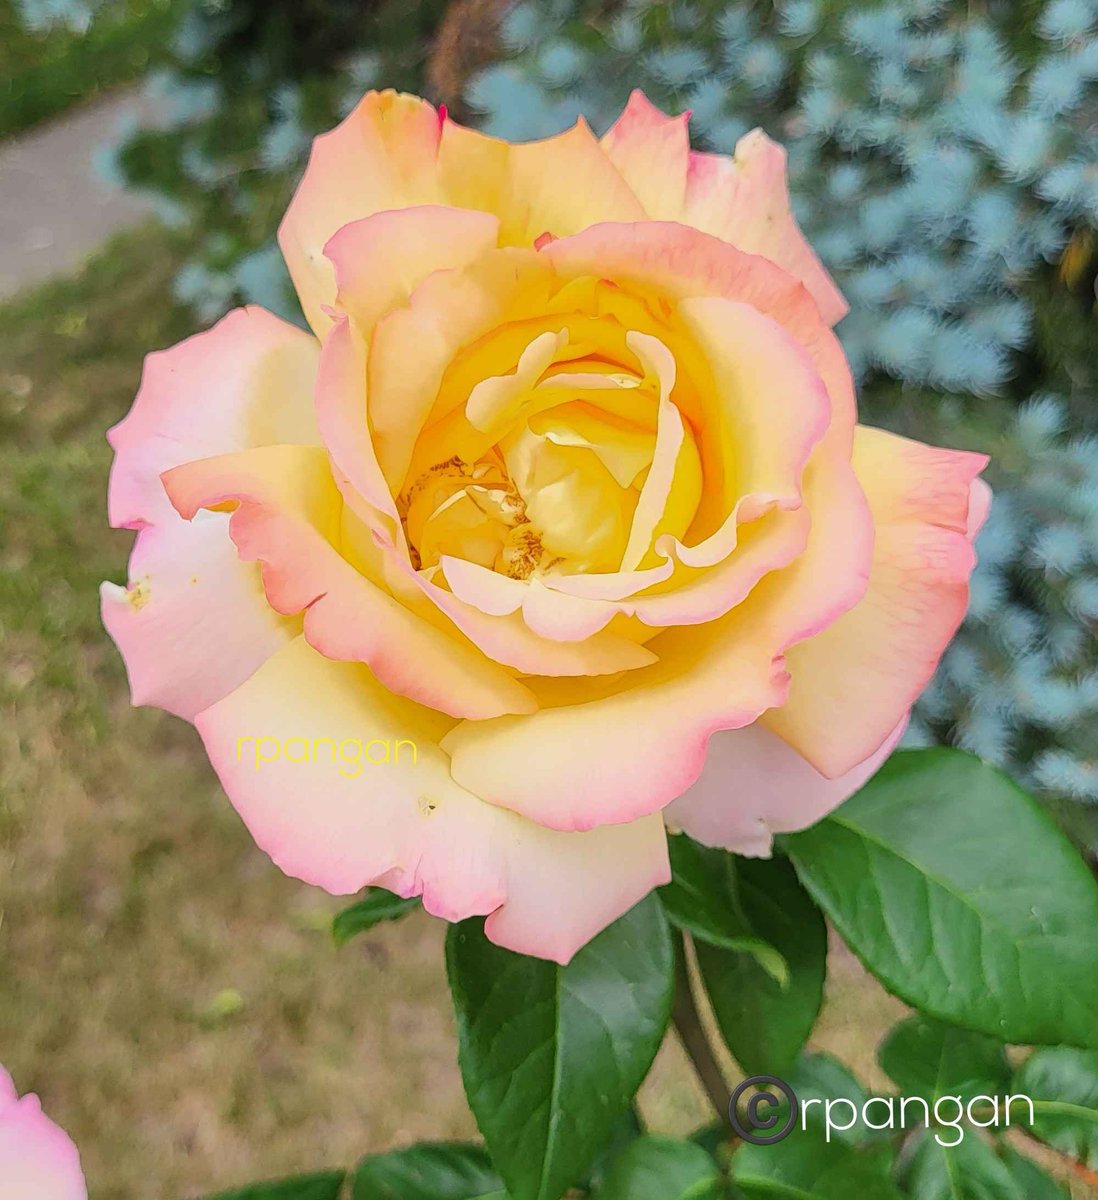 Rosa Peace for #RoseADay #Advent Day 24 and #SundayYellow .
#MerryChristmas #Peace
#PeaceAndLove #Flowers #Roses #GardeningTwitter #gardeners #gardenshour